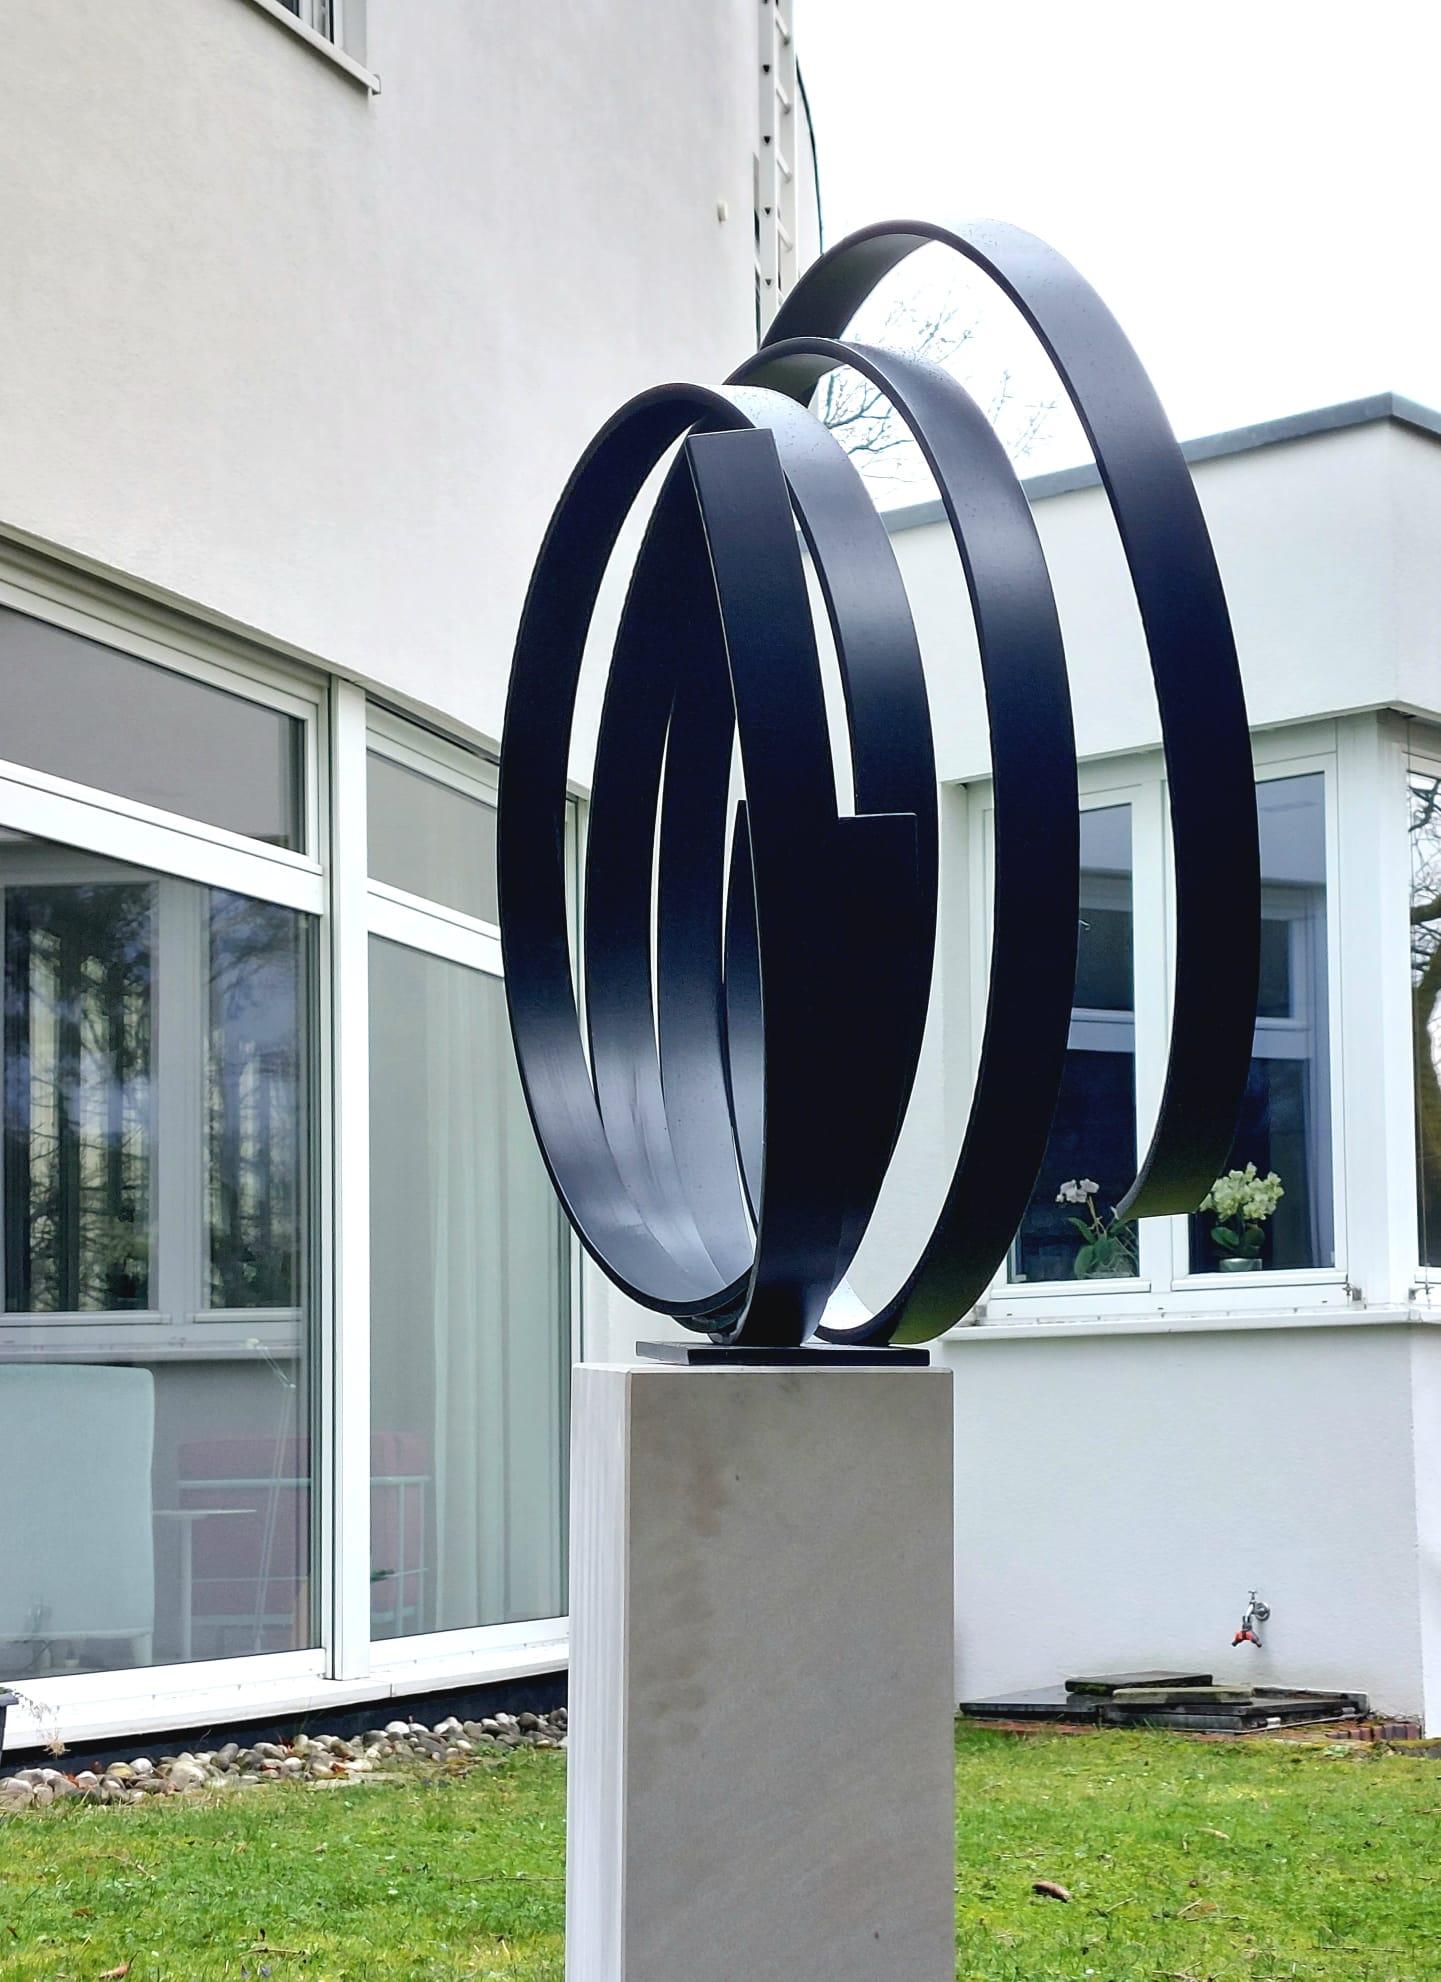 Black Orbit by Kuno Vollet - Large Contemporary Round Orbit sculpture 